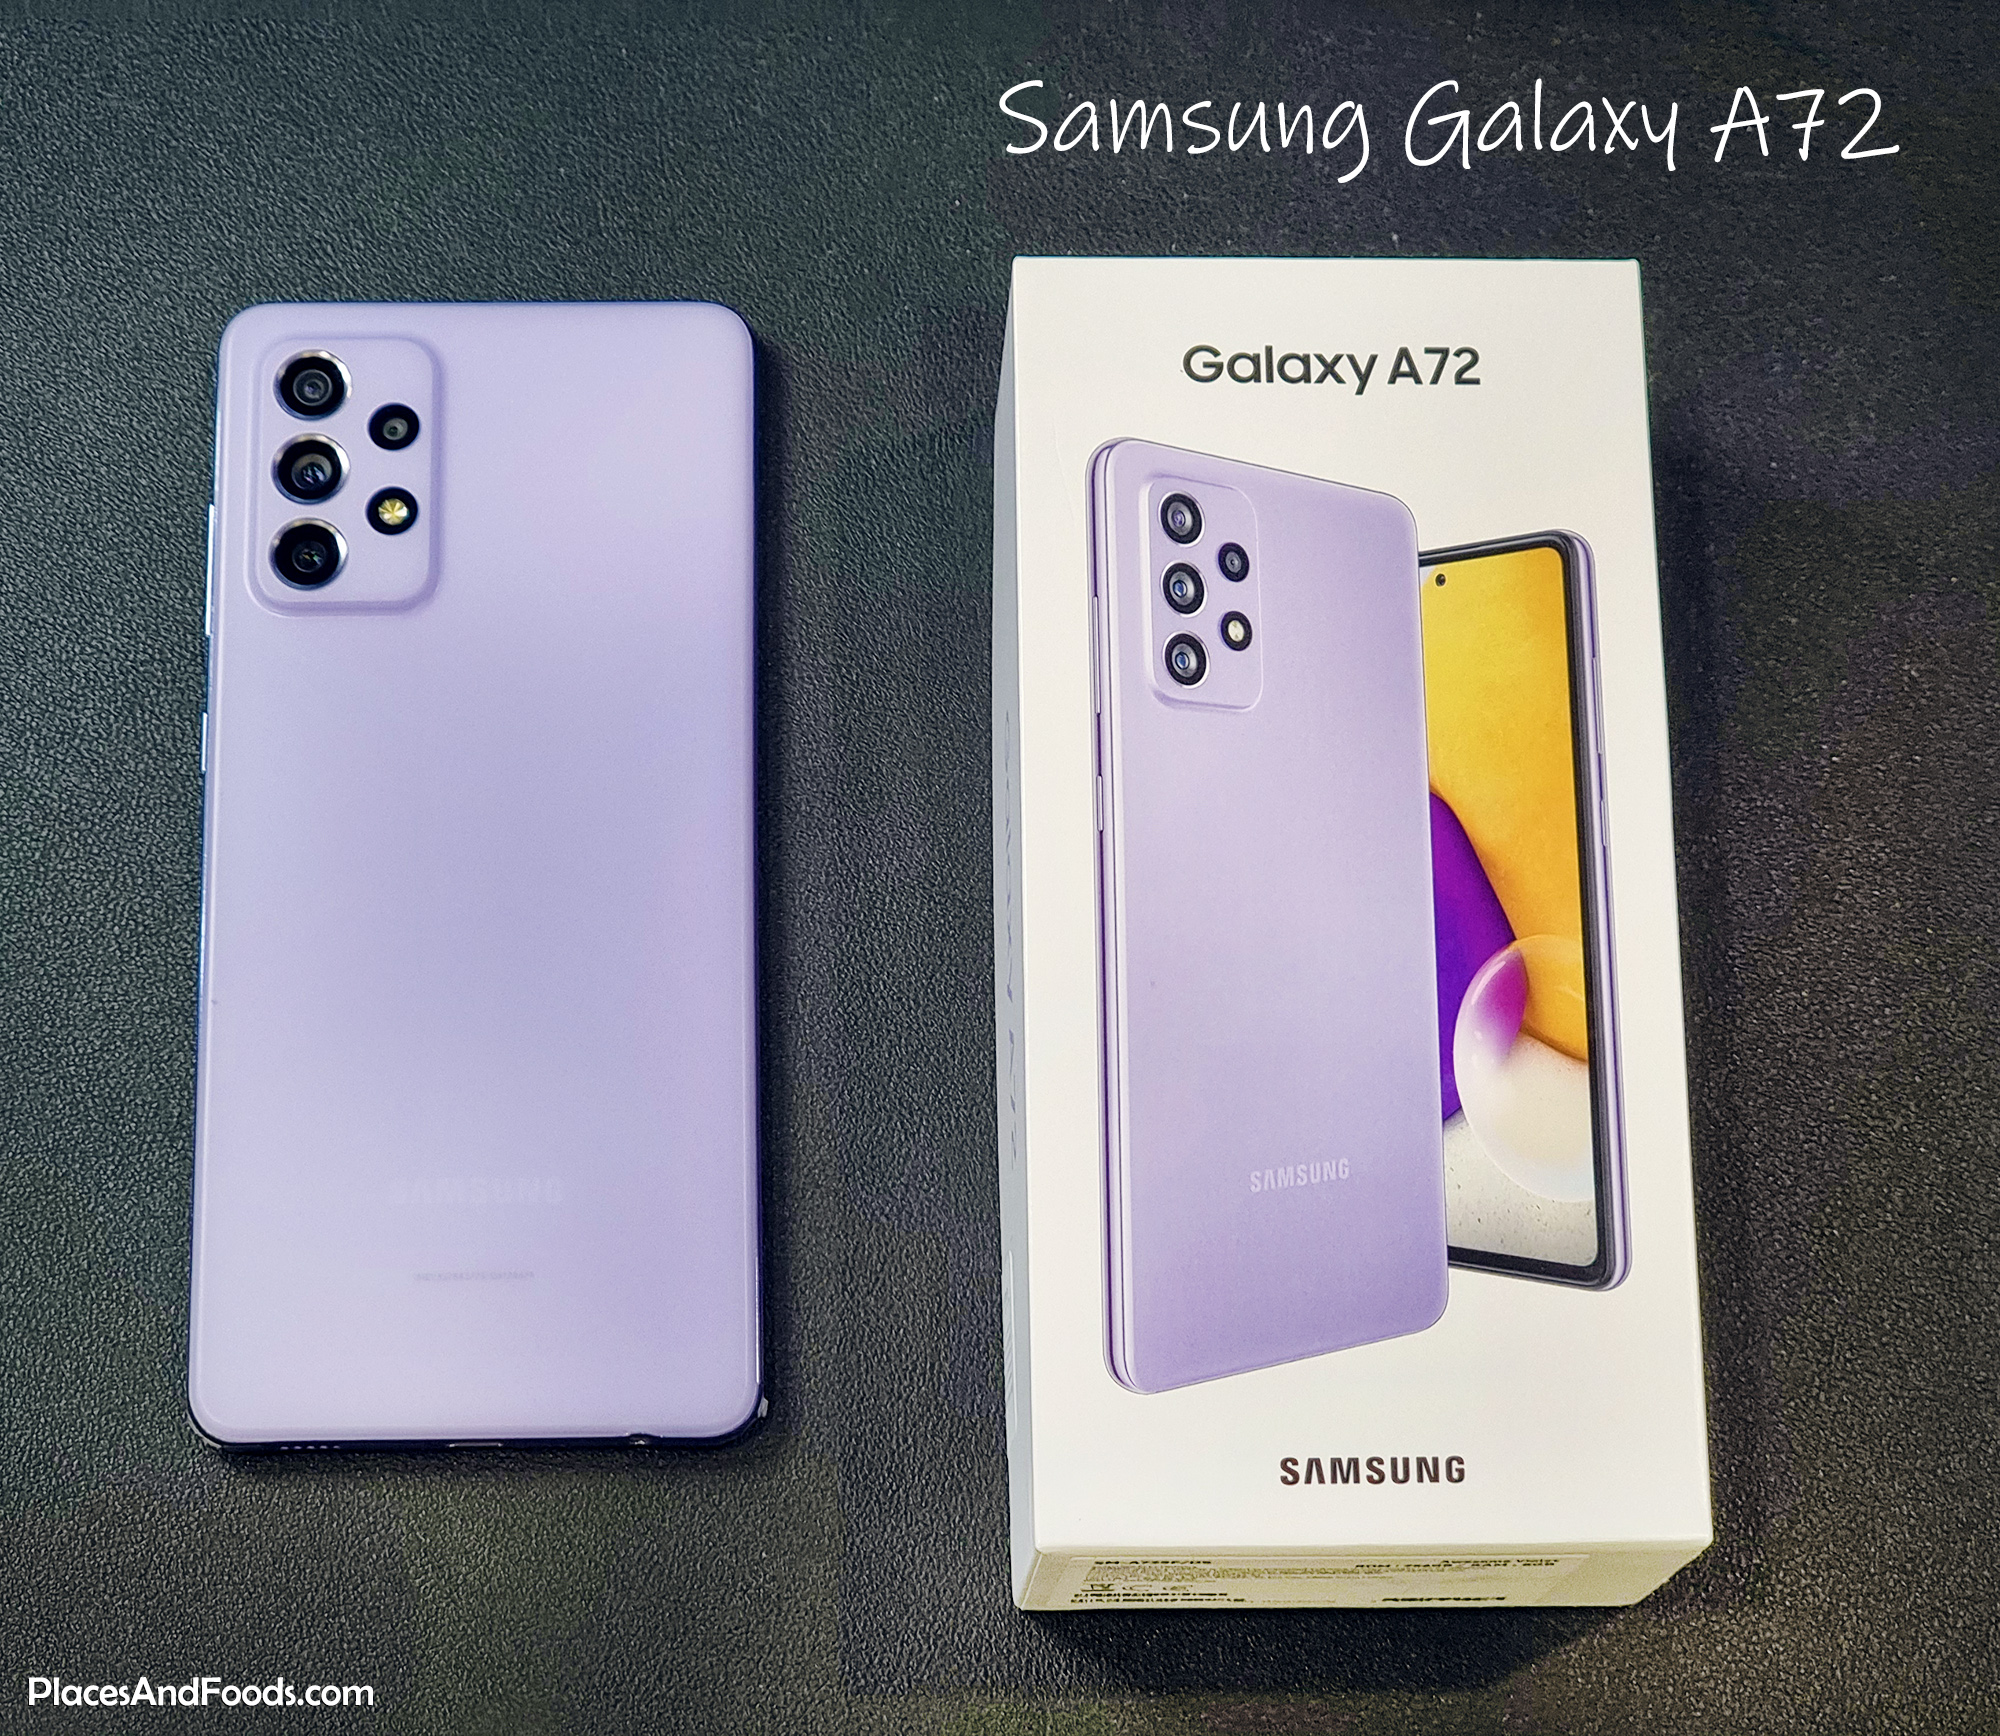 Samsung galaxy a72 price in malaysia